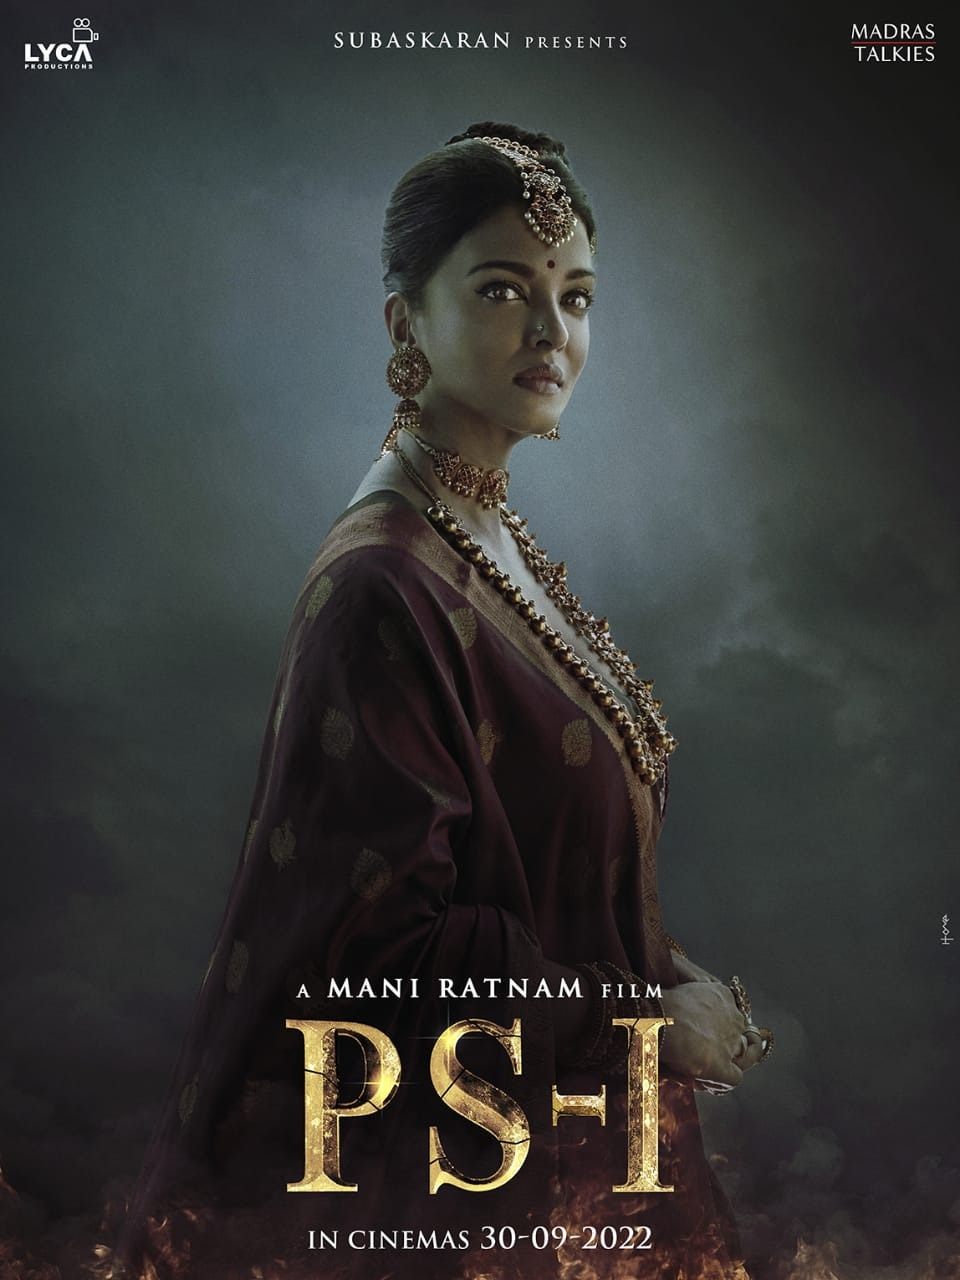 PS1 Ponniyin Selvan Movie Overseas Theatrical Rights LYCA Tentkotta